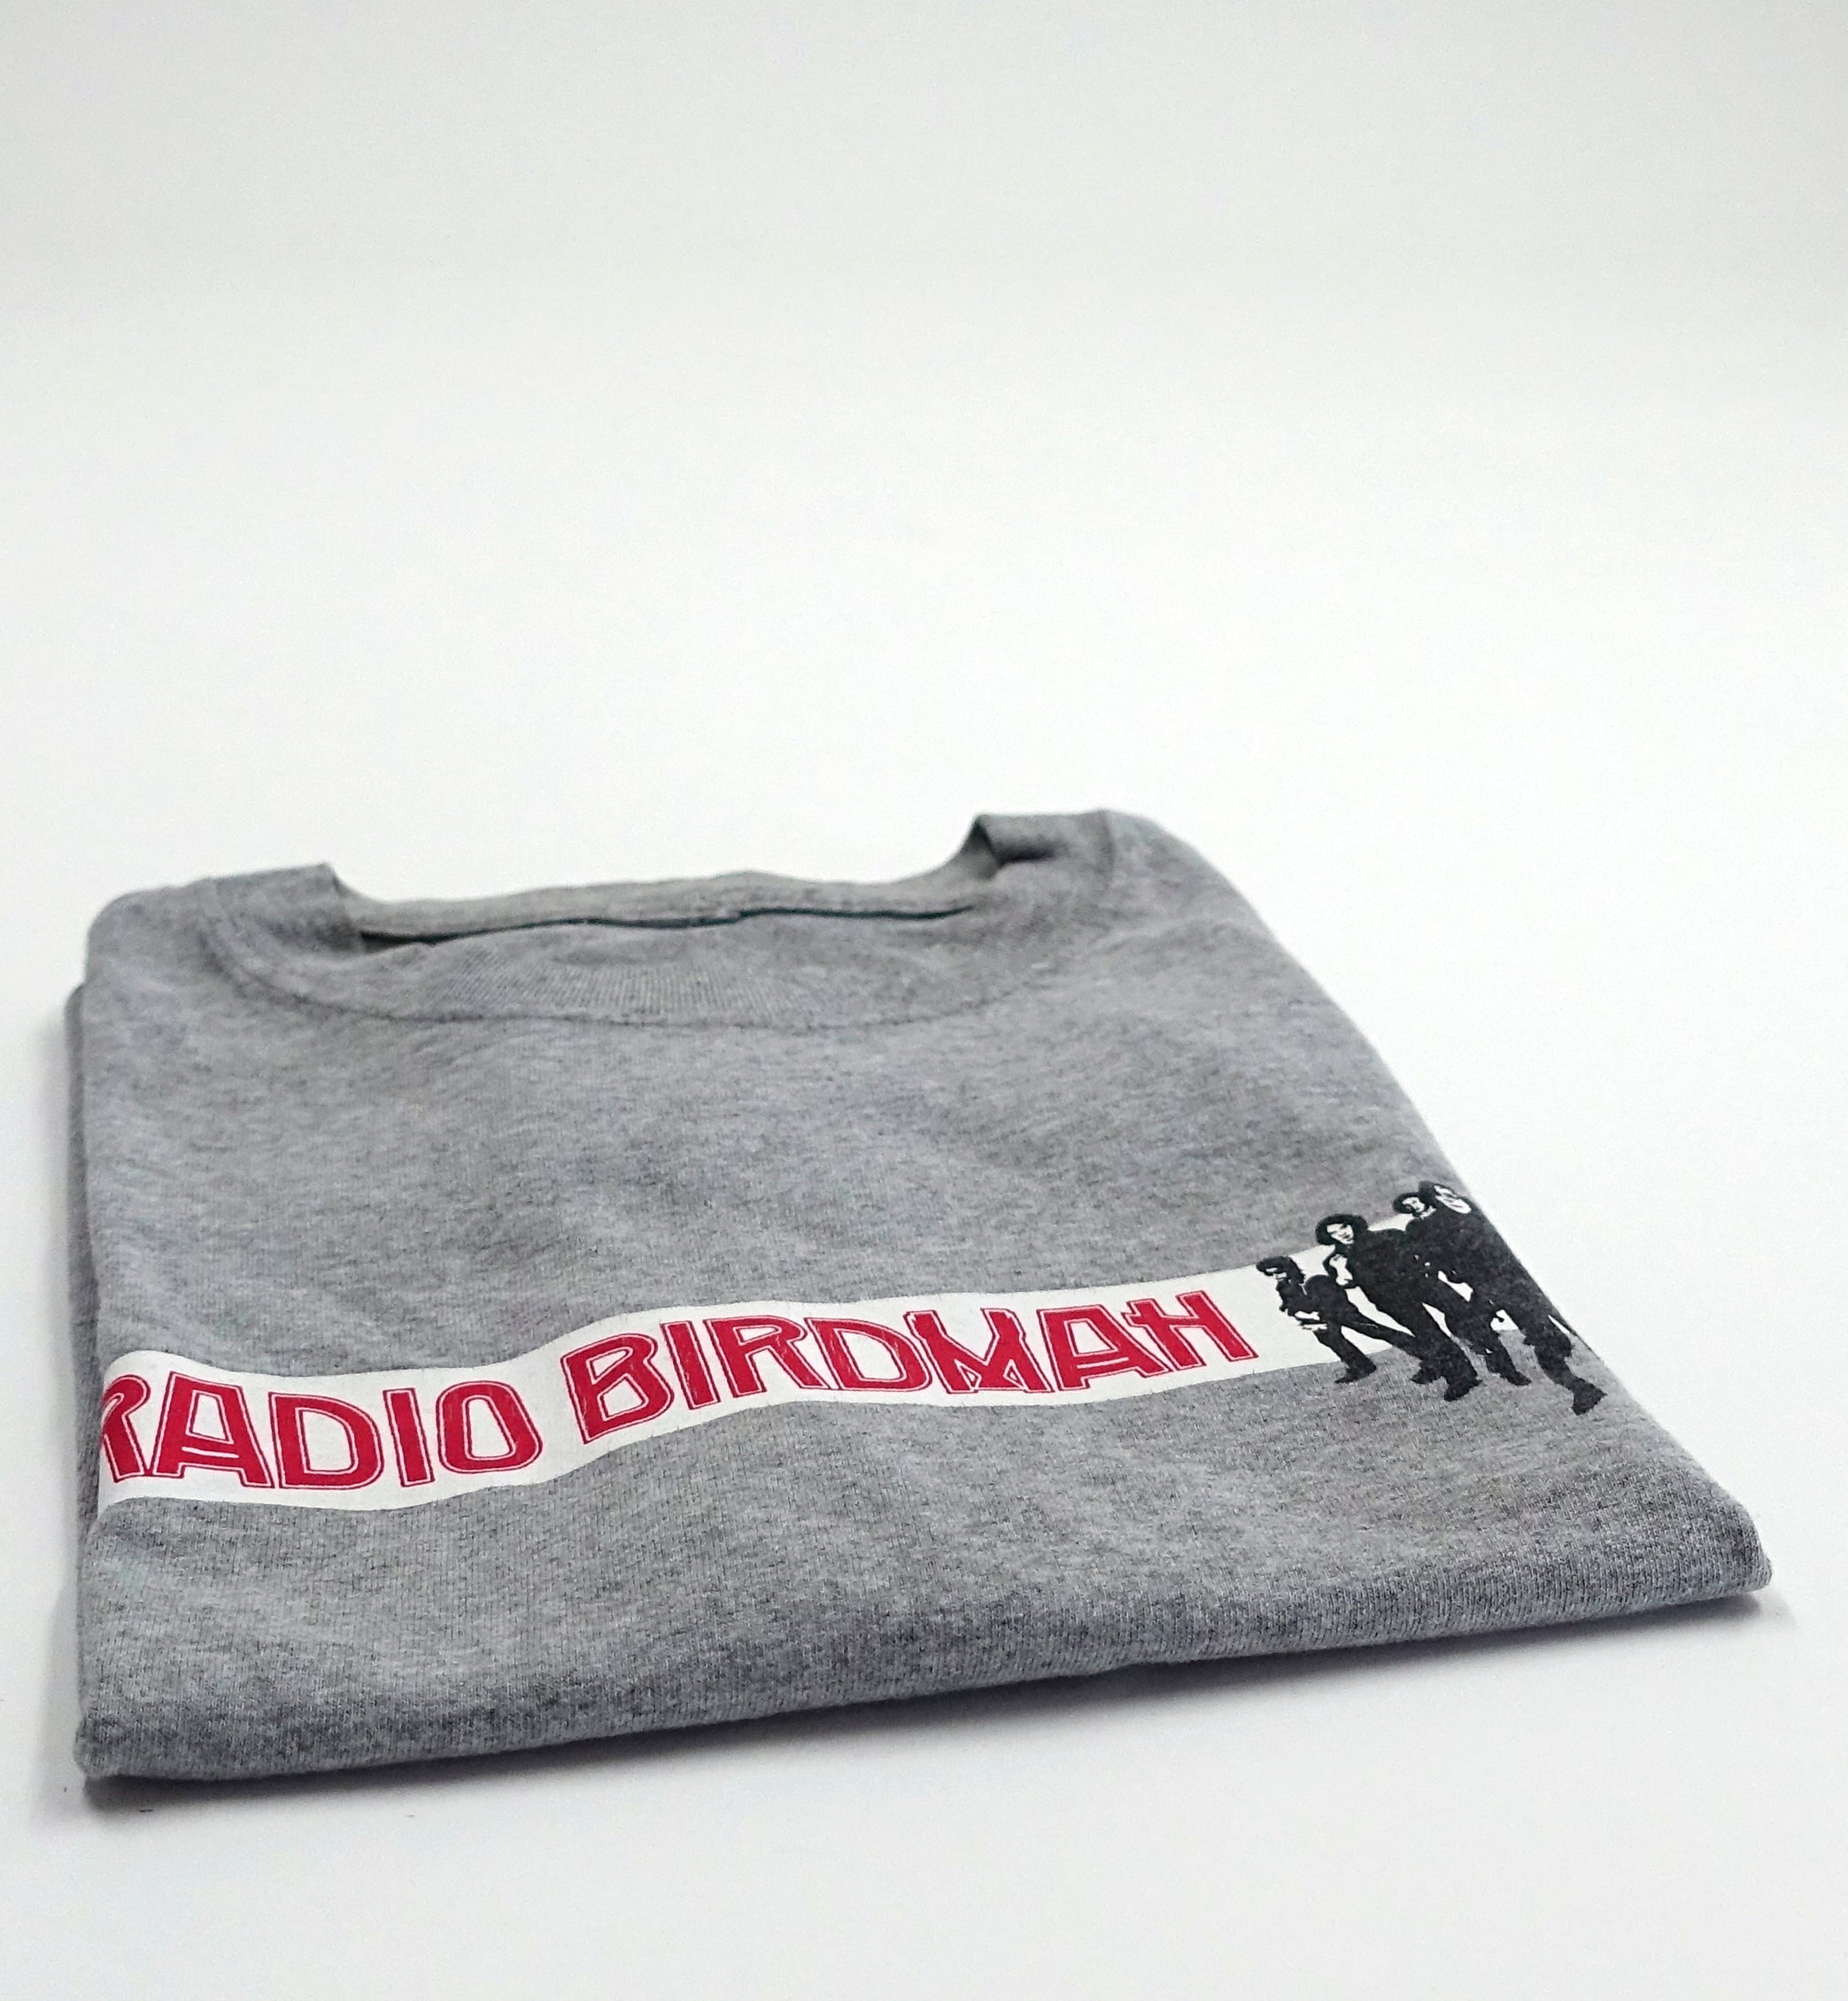 Radio Birdman - Essential Radio Birdman (1974-1978) 2001 Promo Shirt Size XL